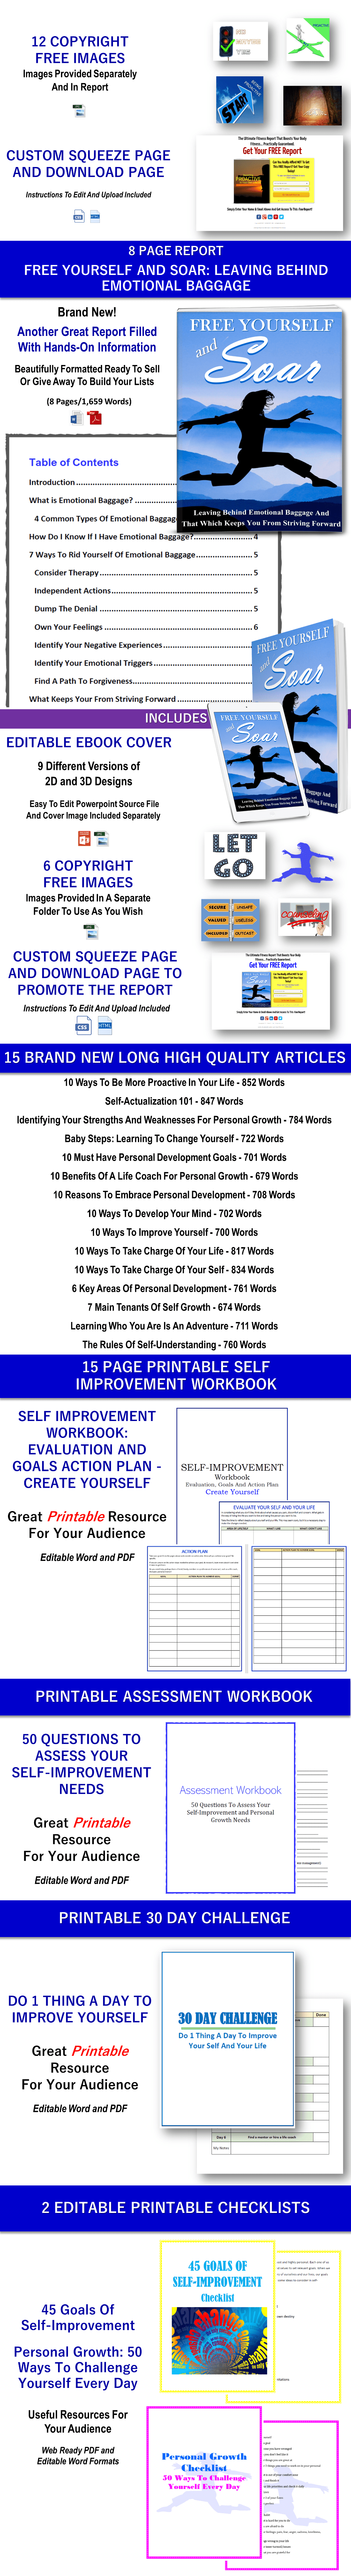 Self Improvement/Personal Growth Giant PLR